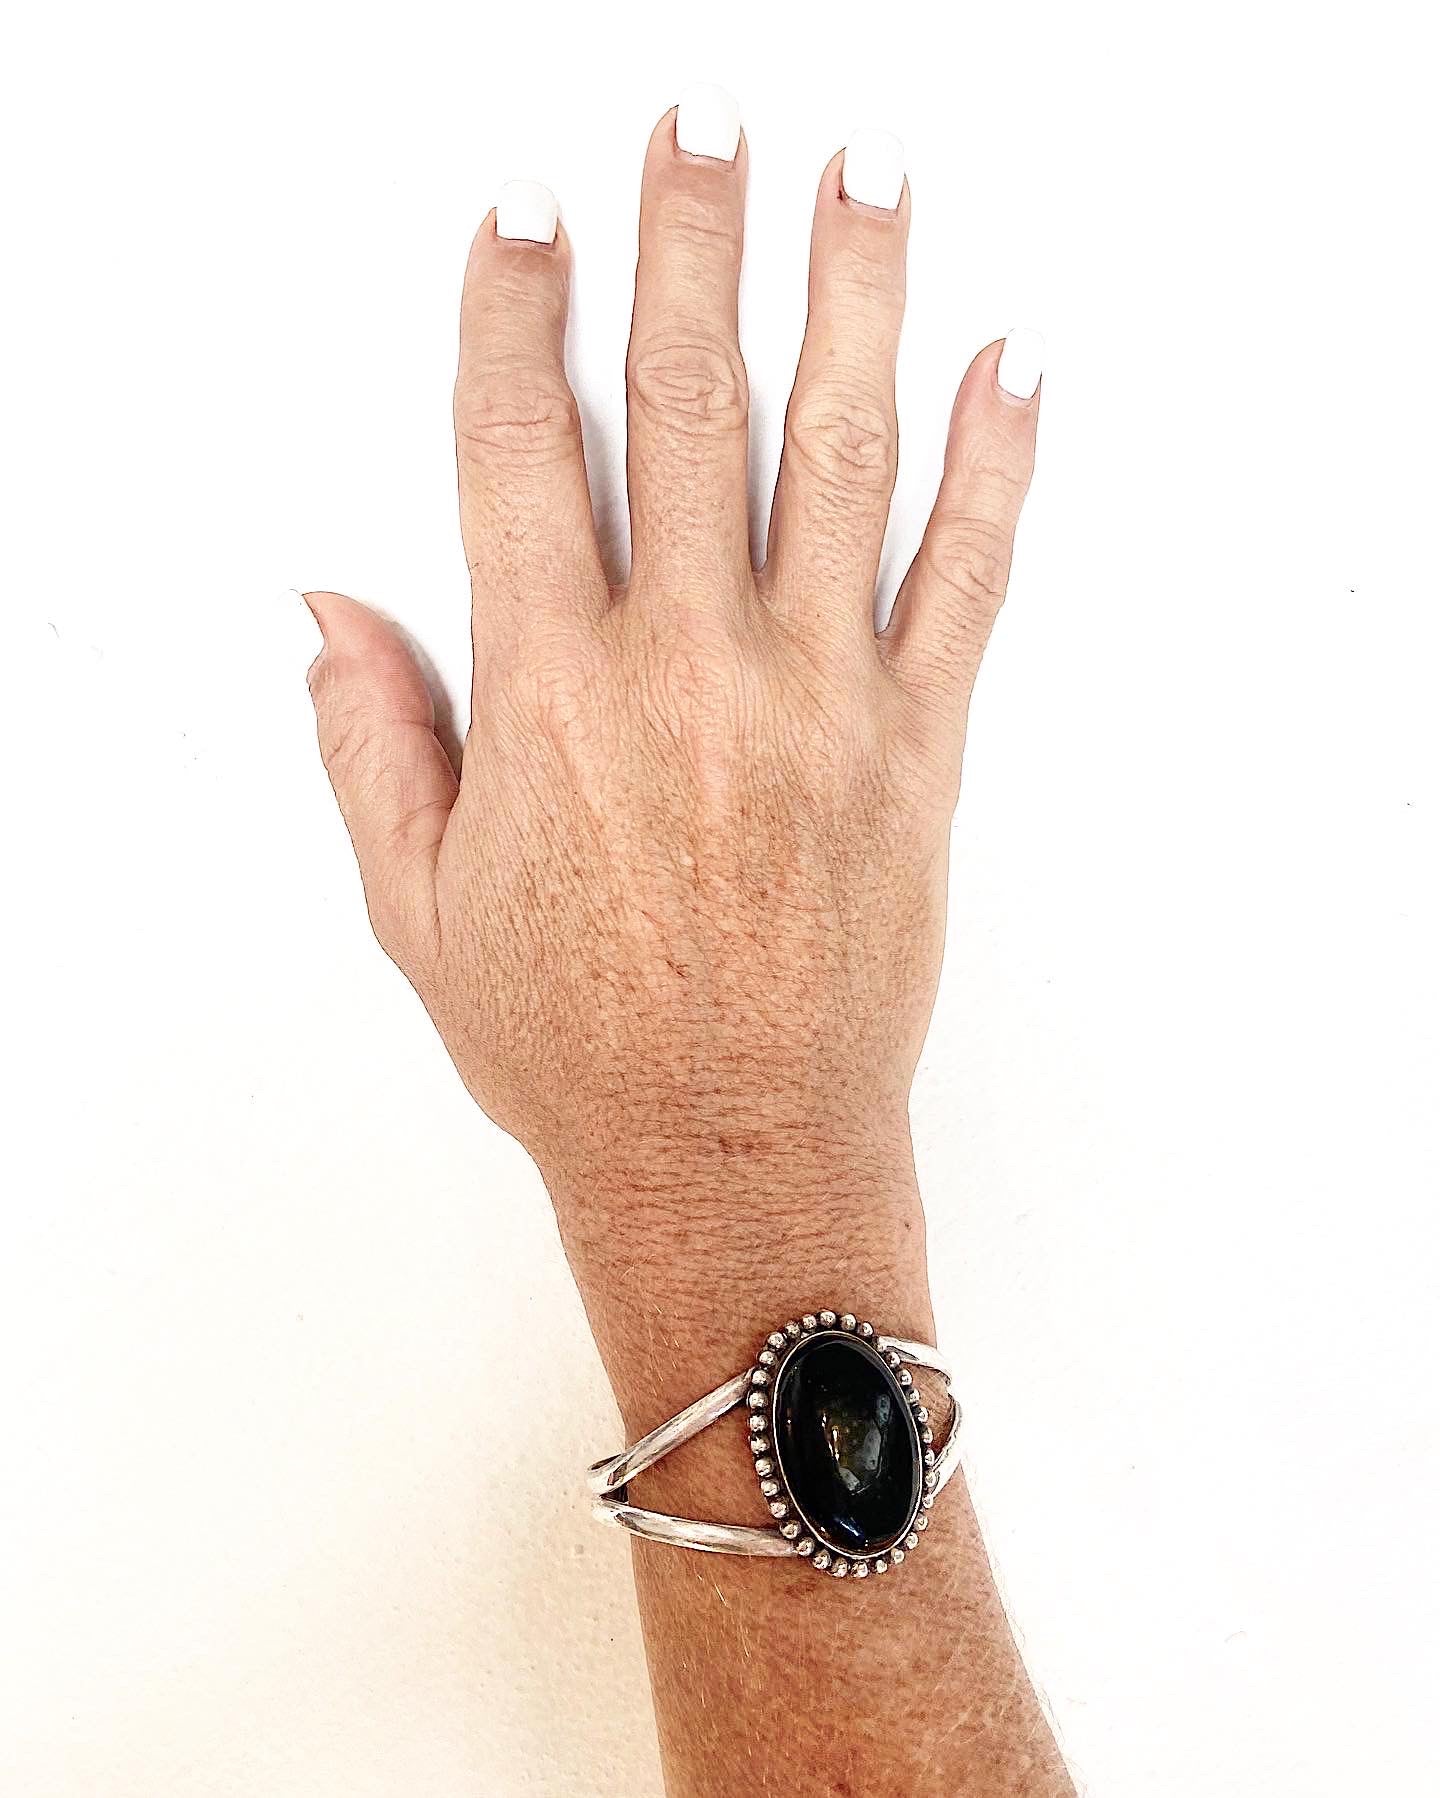 Handmade Sterling Silver925 bracelet with a black onyx